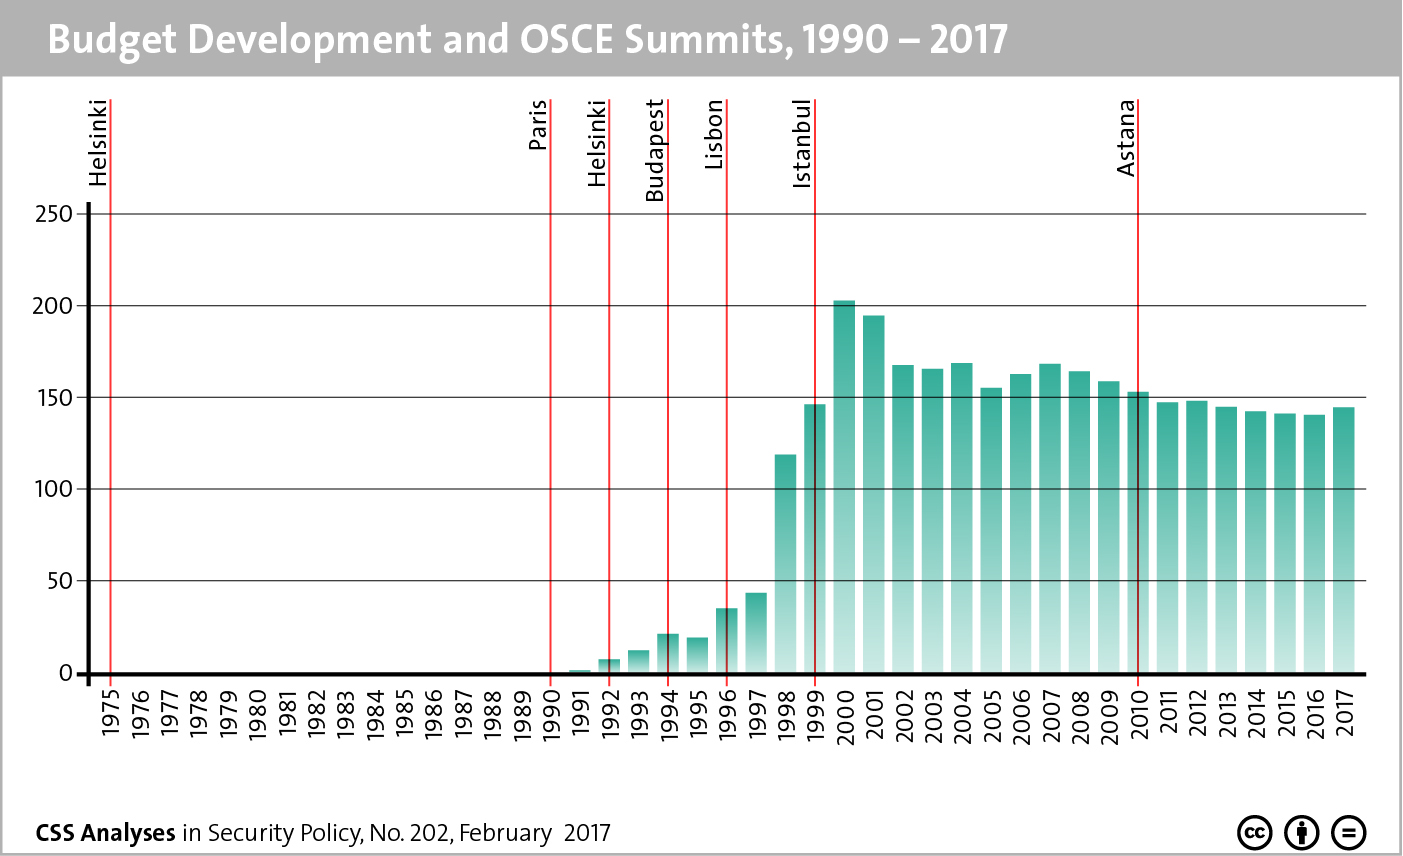 Budget Development and OSCE Summits